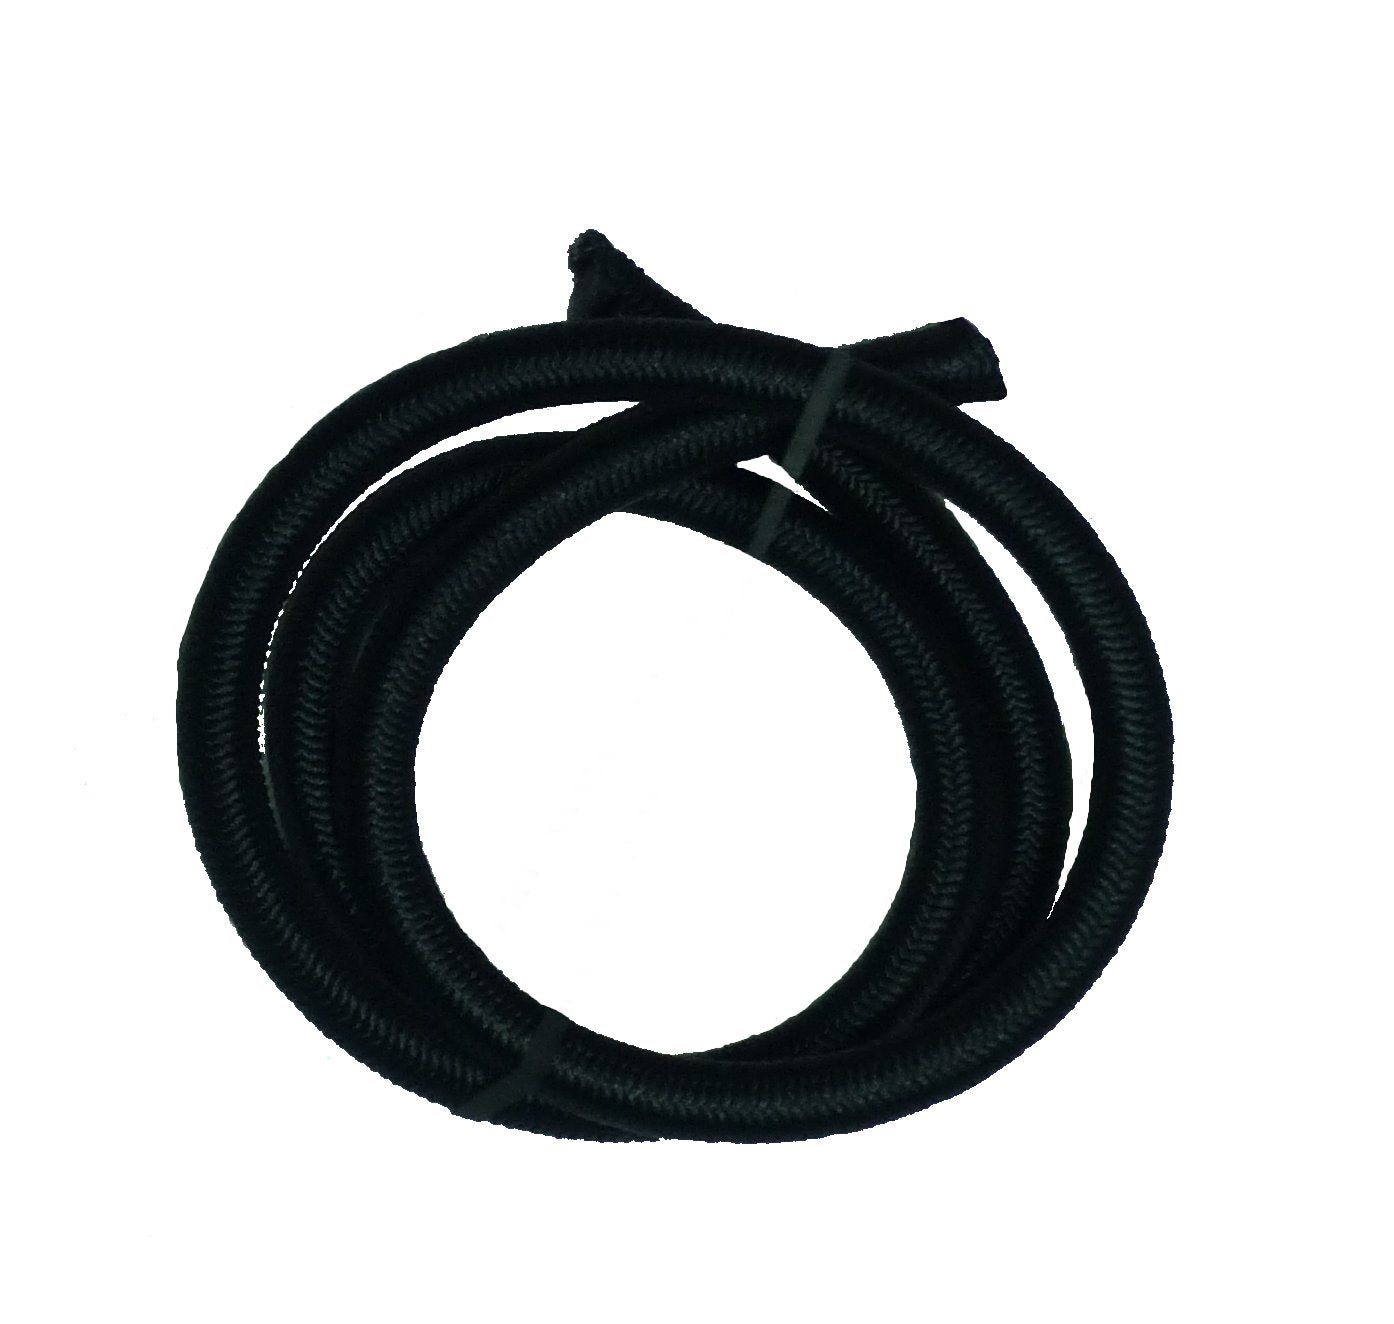 6mm shock cord in black